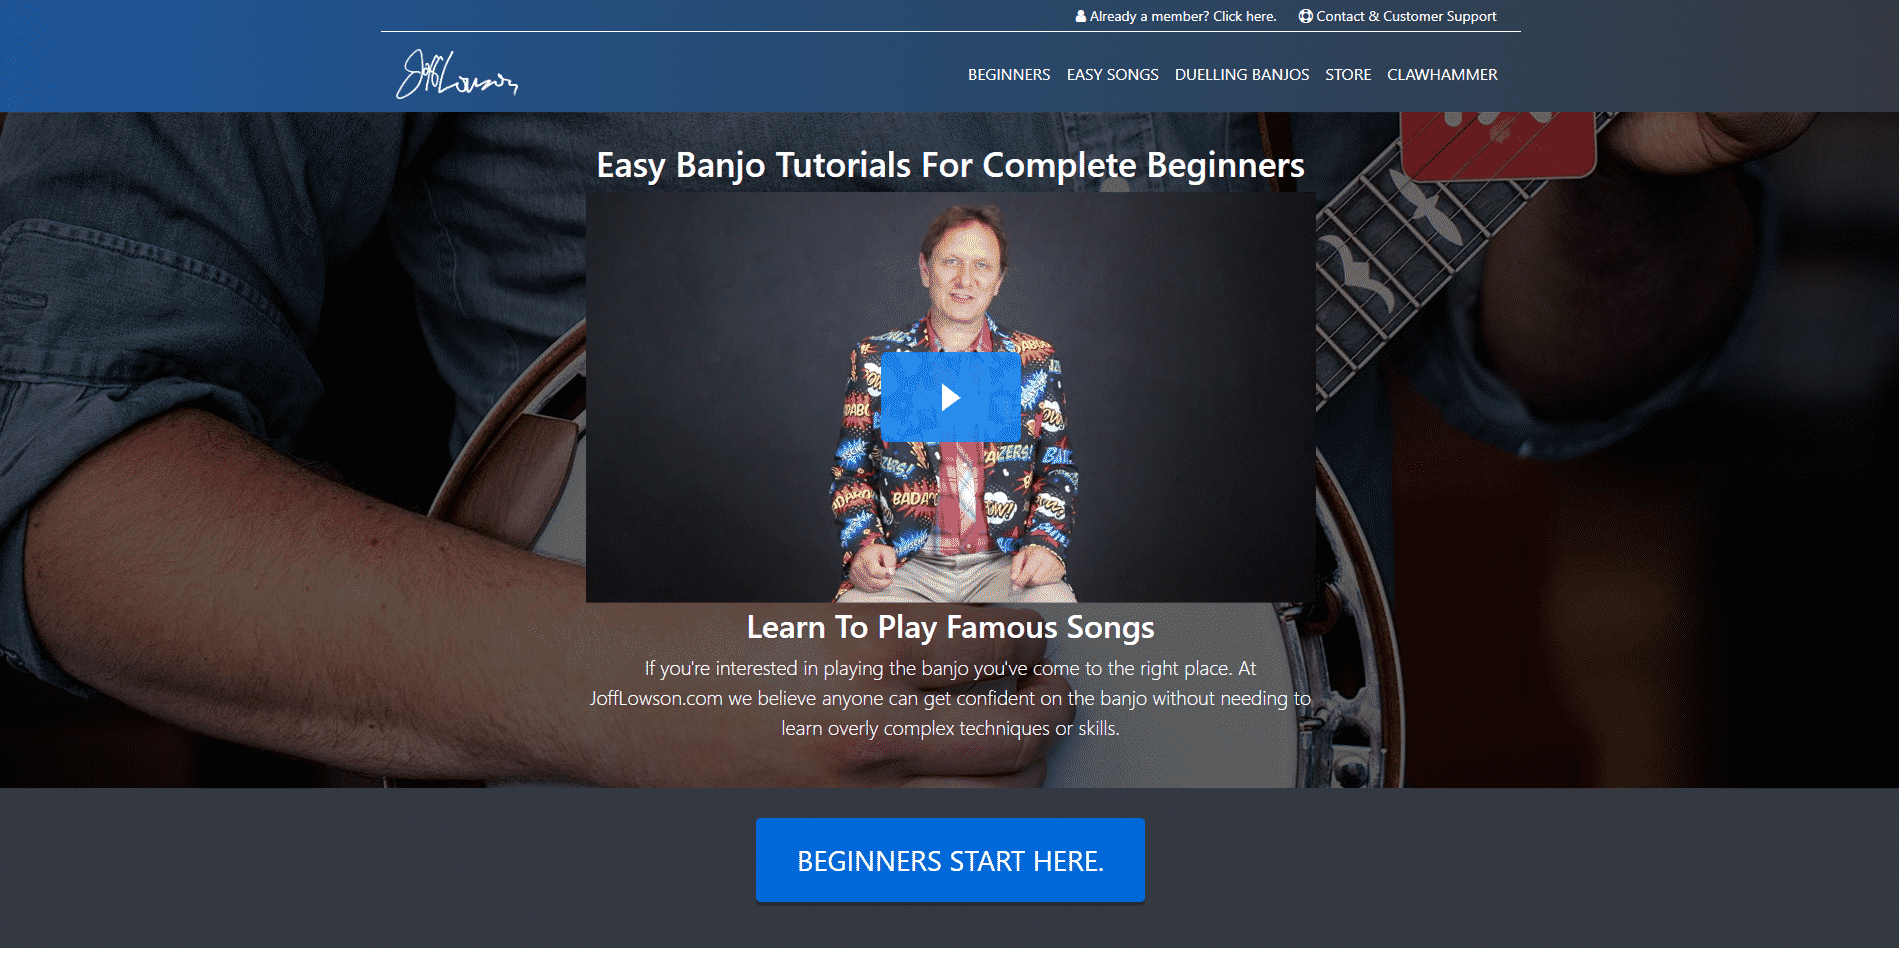 Easy Banjo Tutorials For Complete Beginners